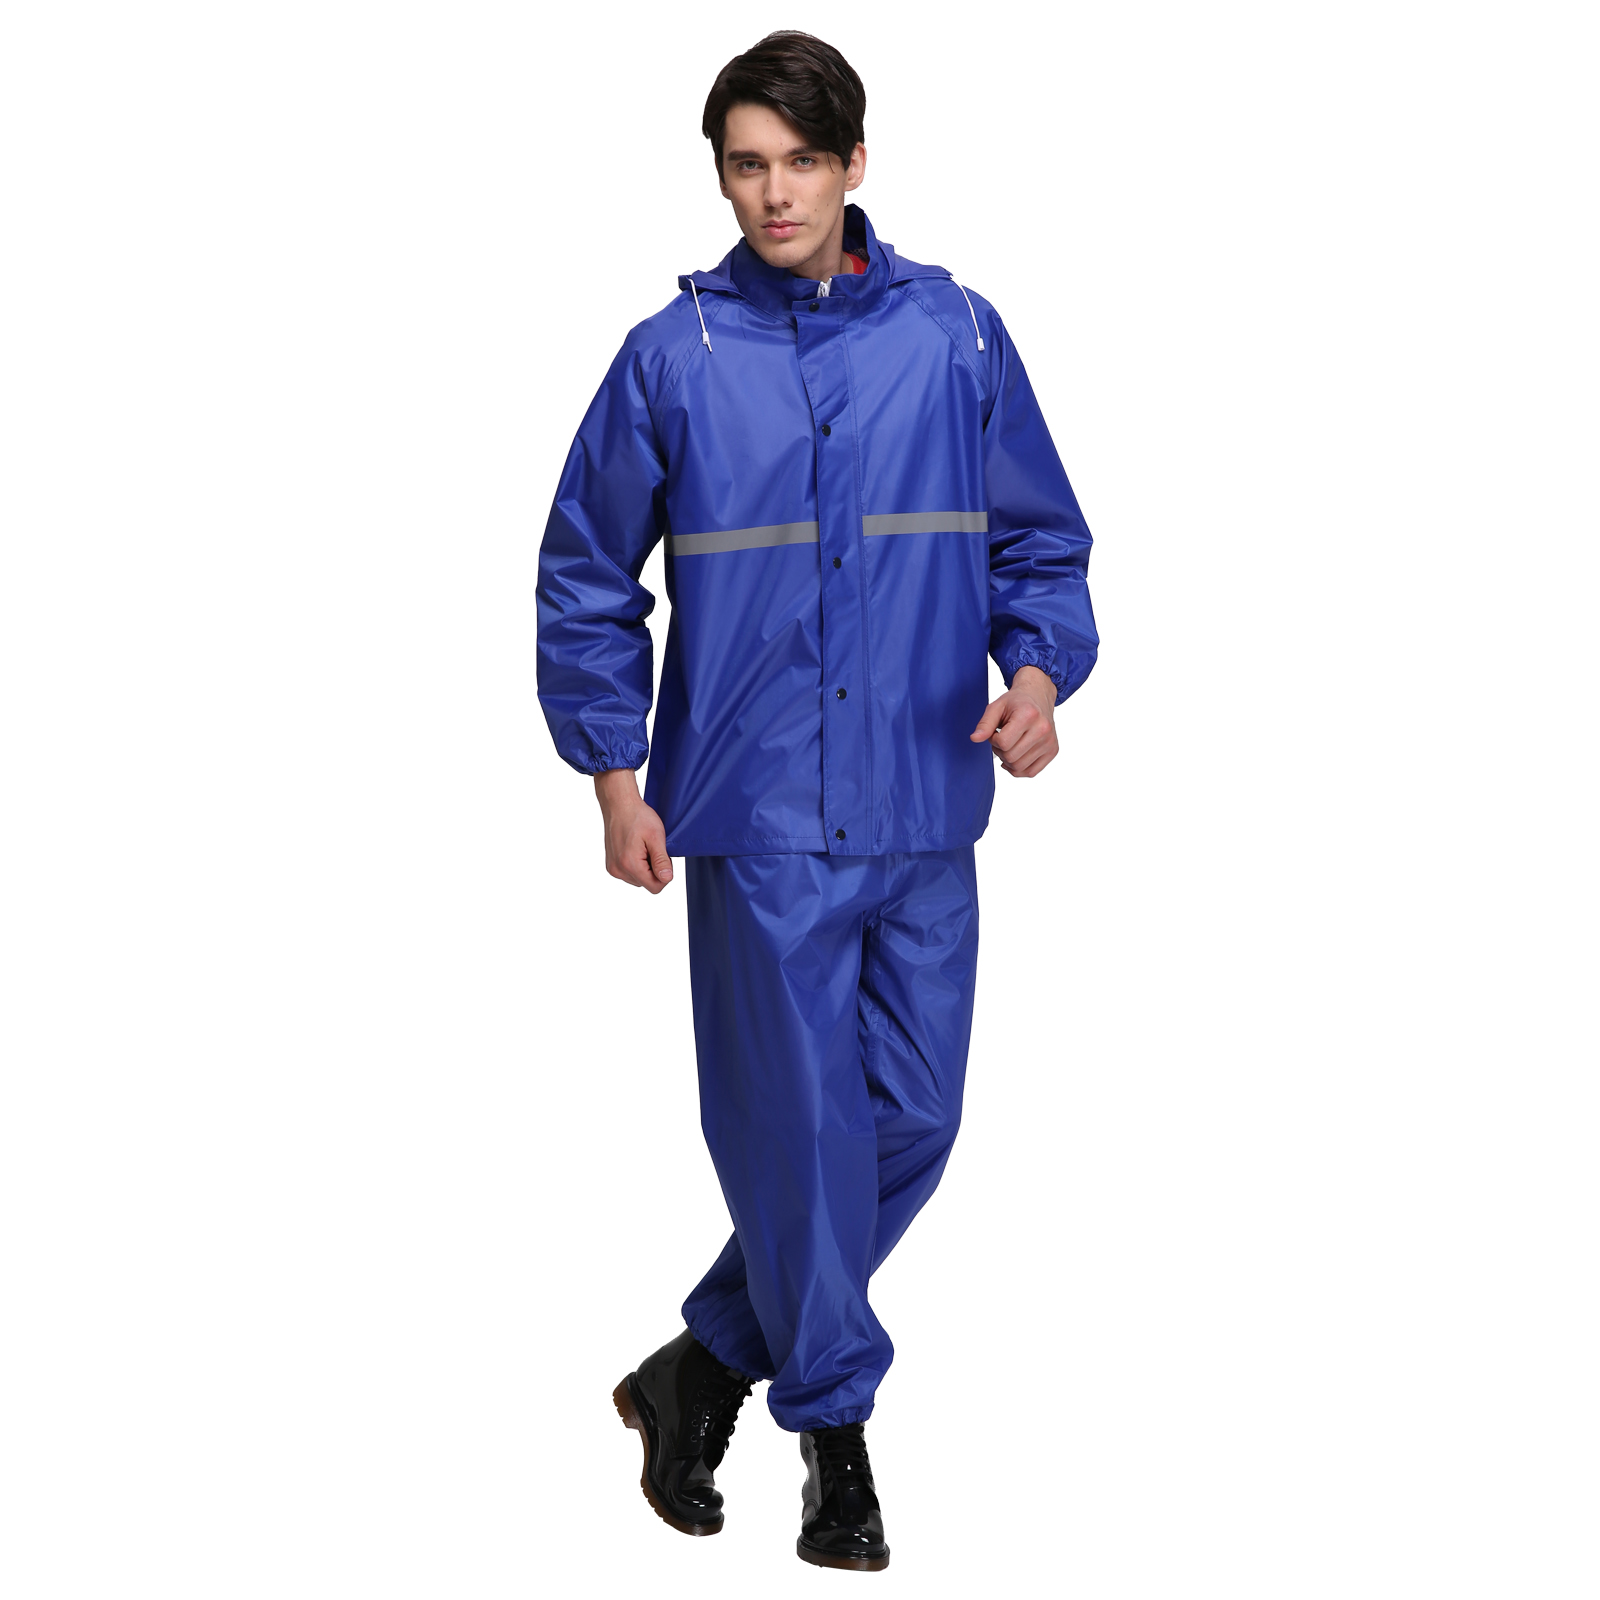 Rainwear 2 Piece Suit, Raincoat Rain Suits for Men Heavy Duty Waterproof  with Hood Motorcycle Riding Golf Fishing Outdoor Work